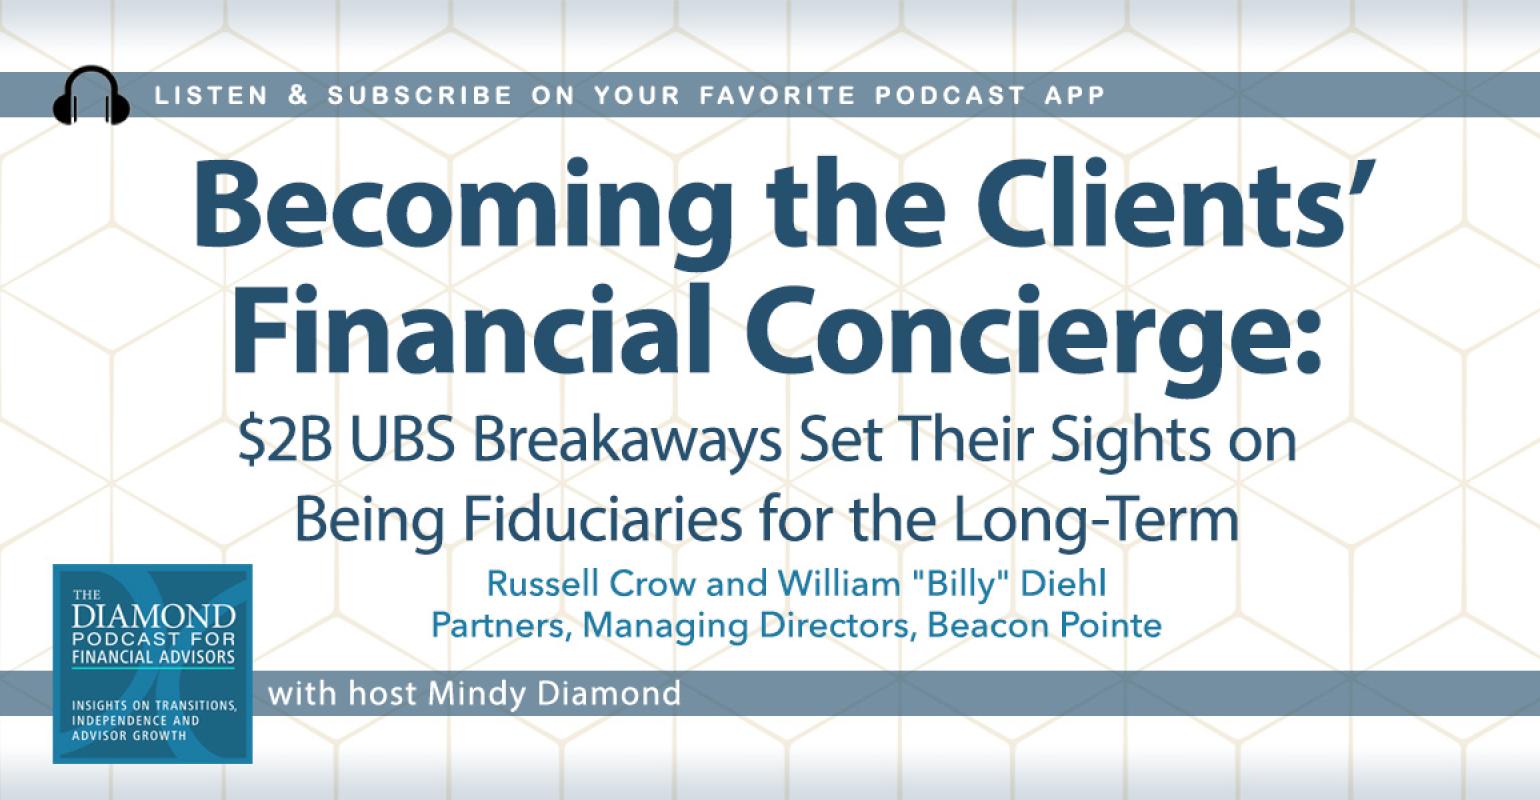 Diamond Podcast for Financial Advisors Beacon Pointe breakaways UBS